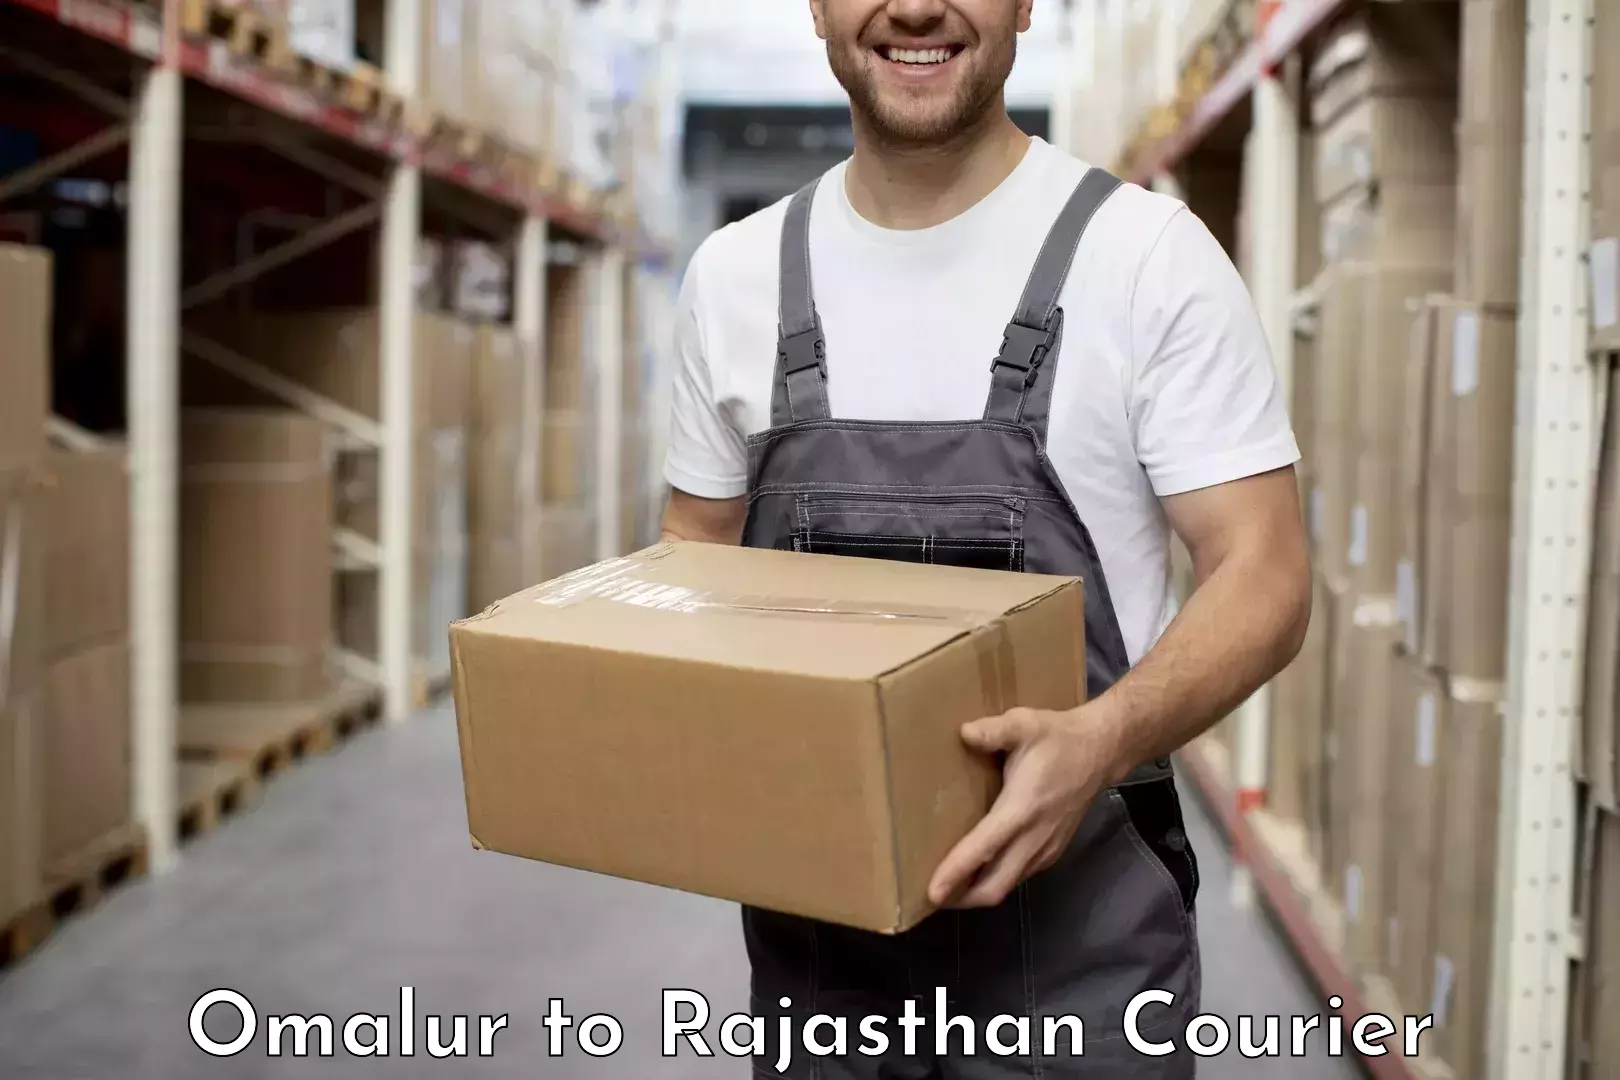 Courier service comparison Omalur to Jaisalmer